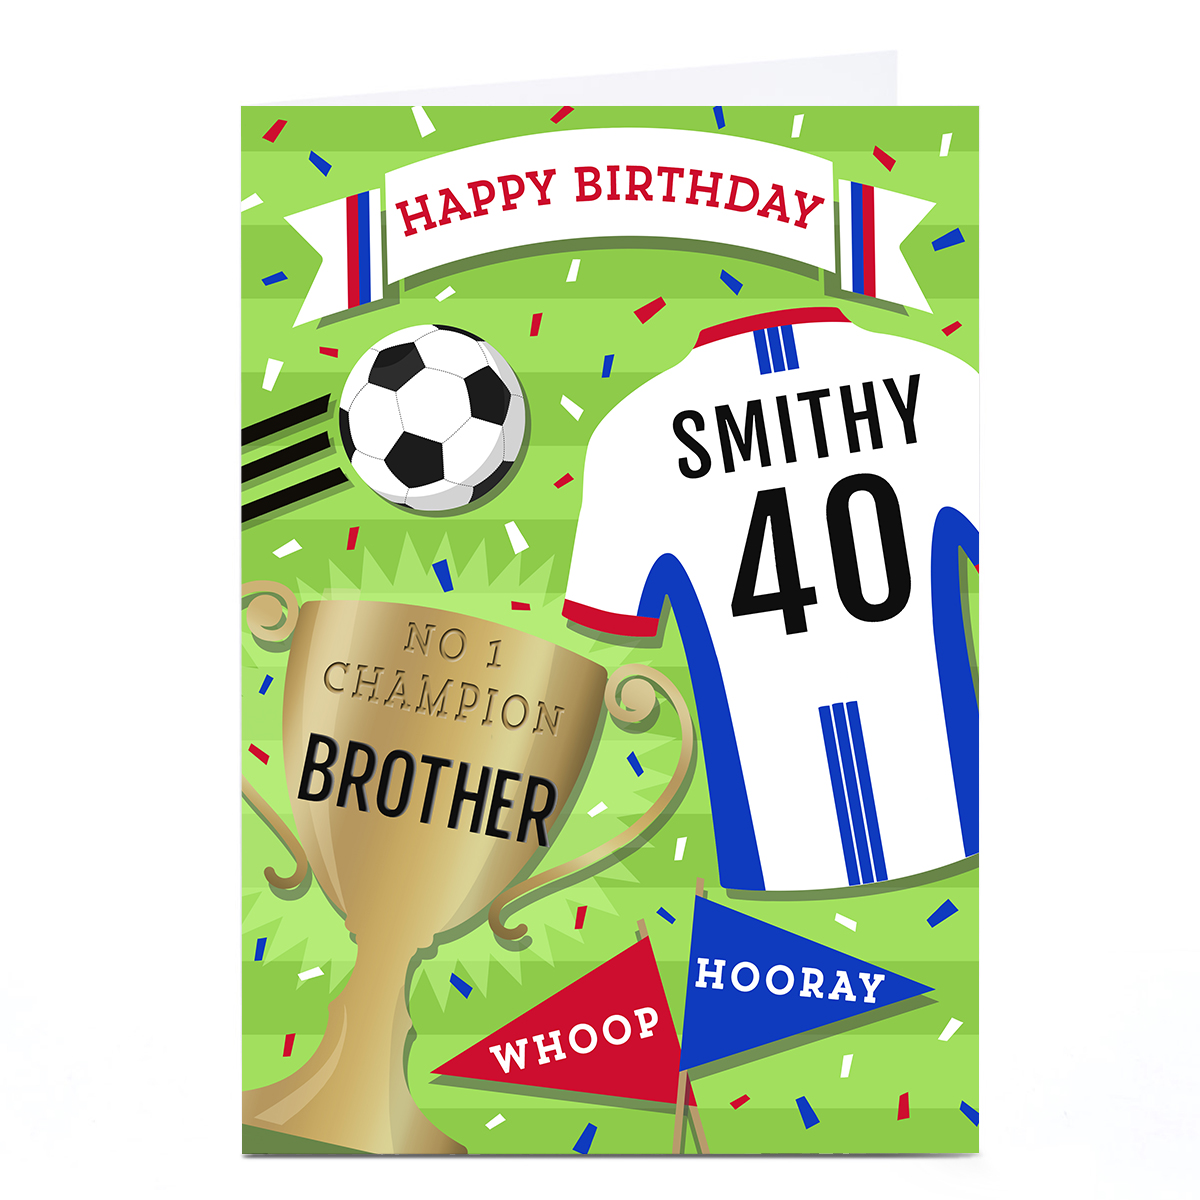 Personalised Birthday Card - Football Shirt Brother